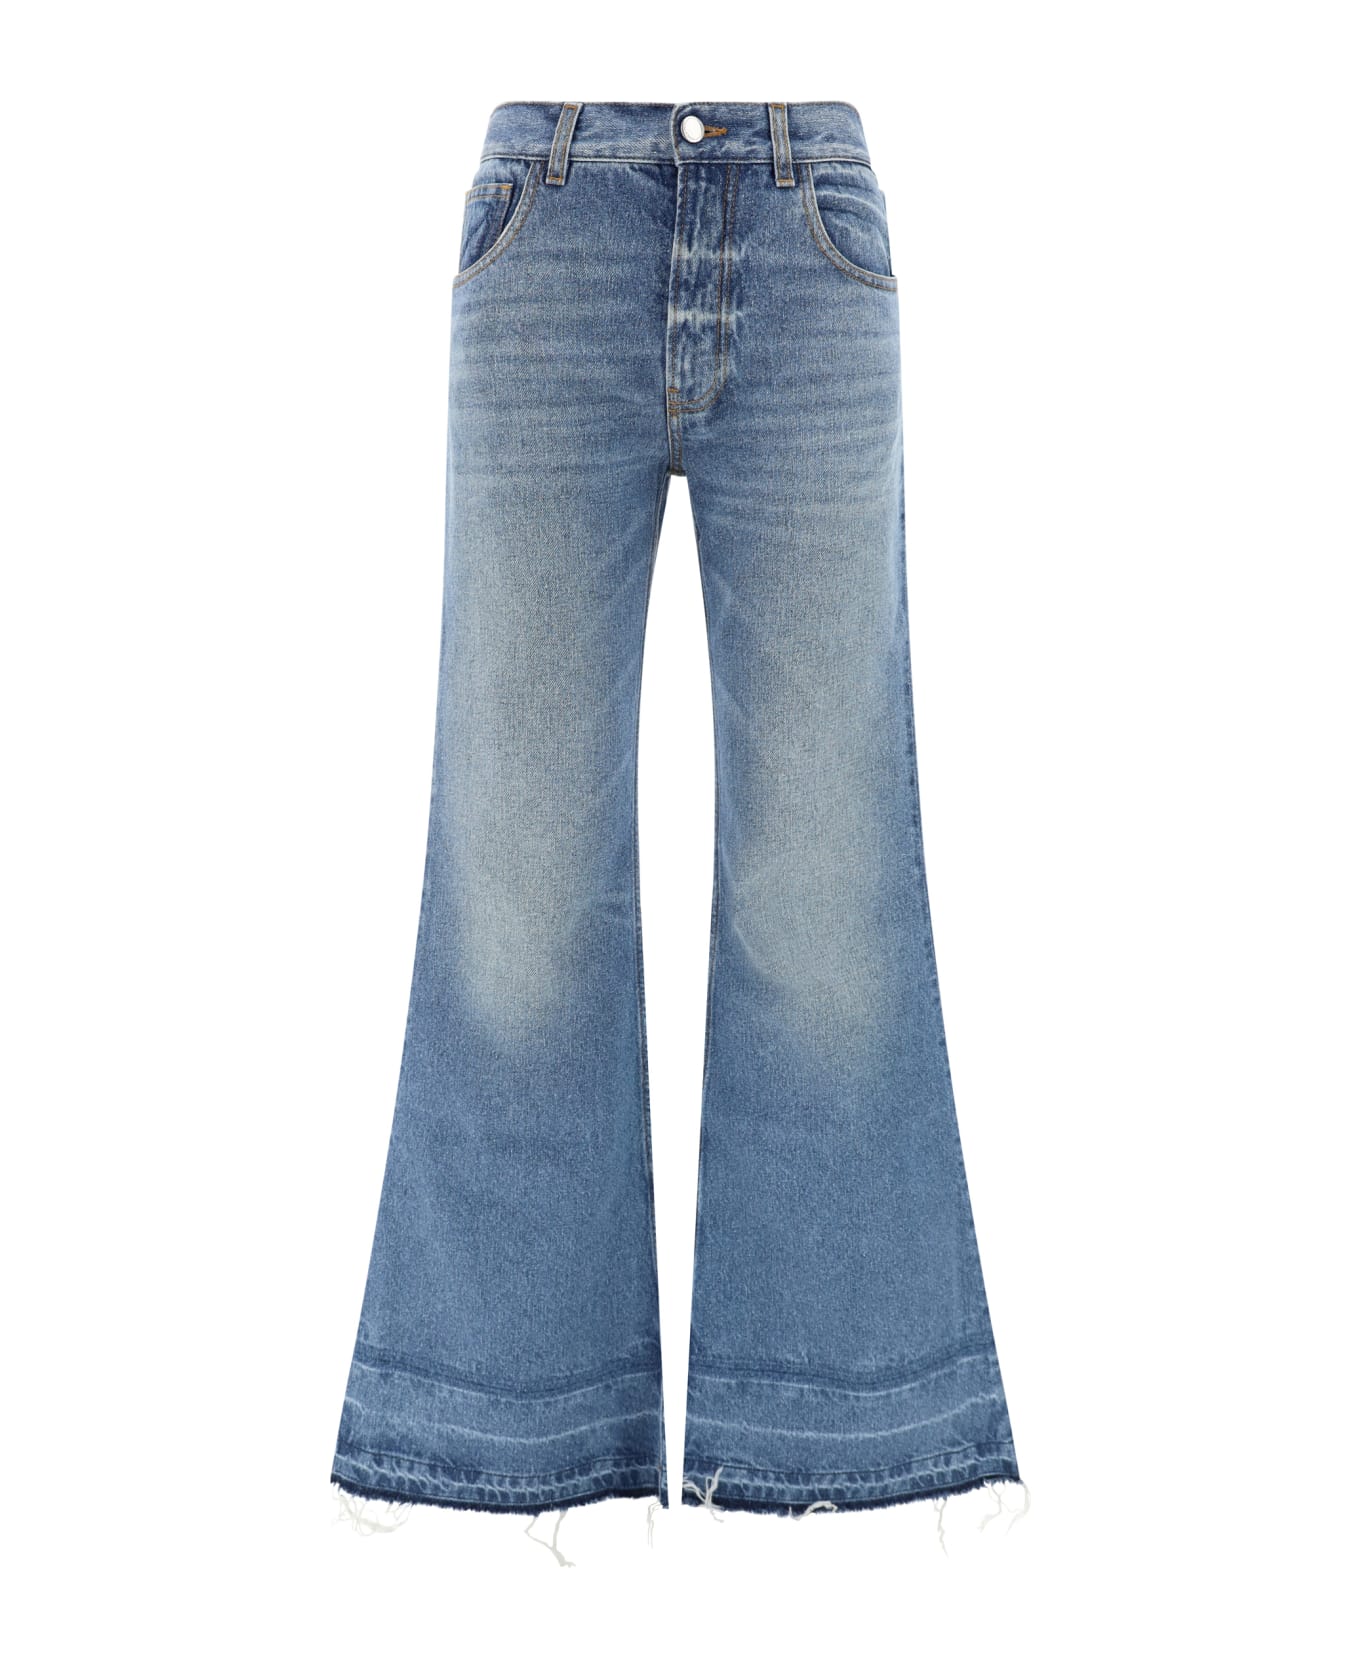 Chloé Frayed Edge Flared Jeans - Foggy Blue デニム